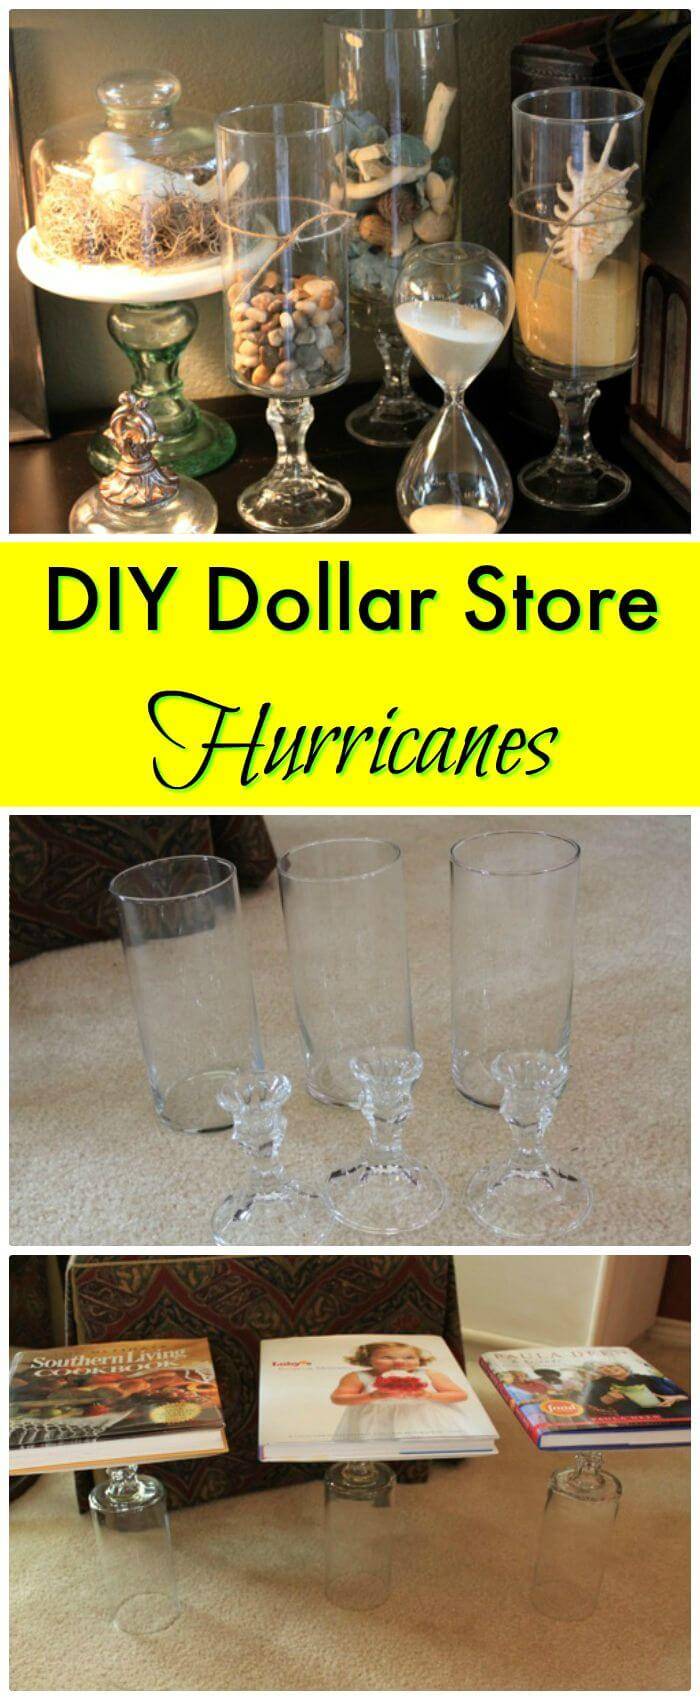 DIY Dollar Store Hurricanes - Free Tutorial 